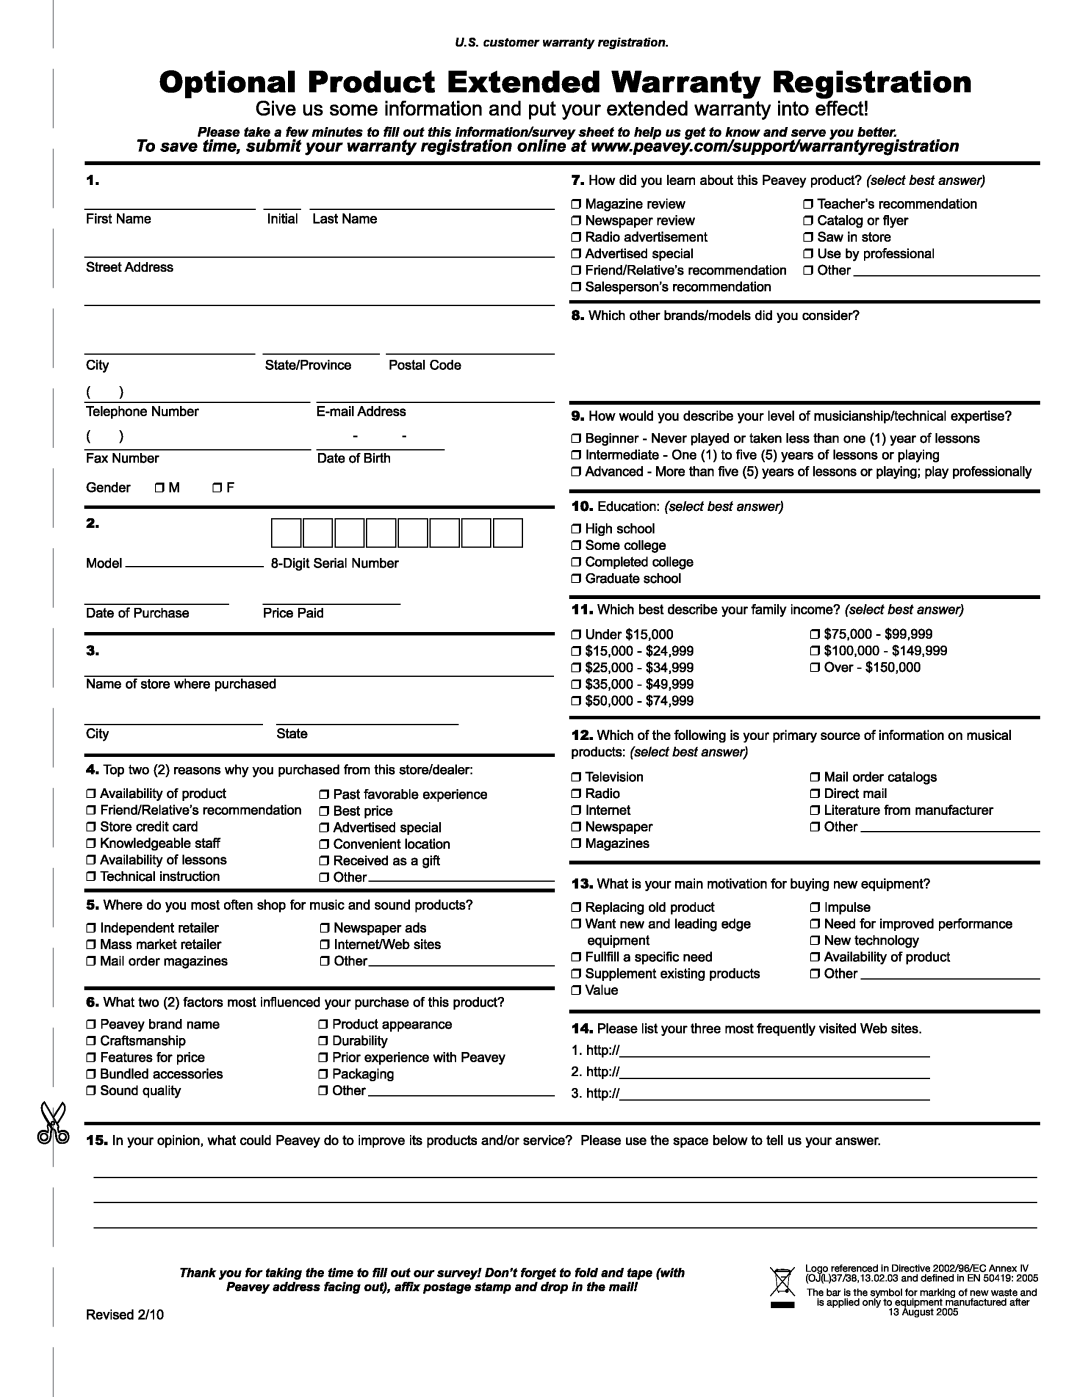 Peavey 12 D manual U.S. customer warranty registration 